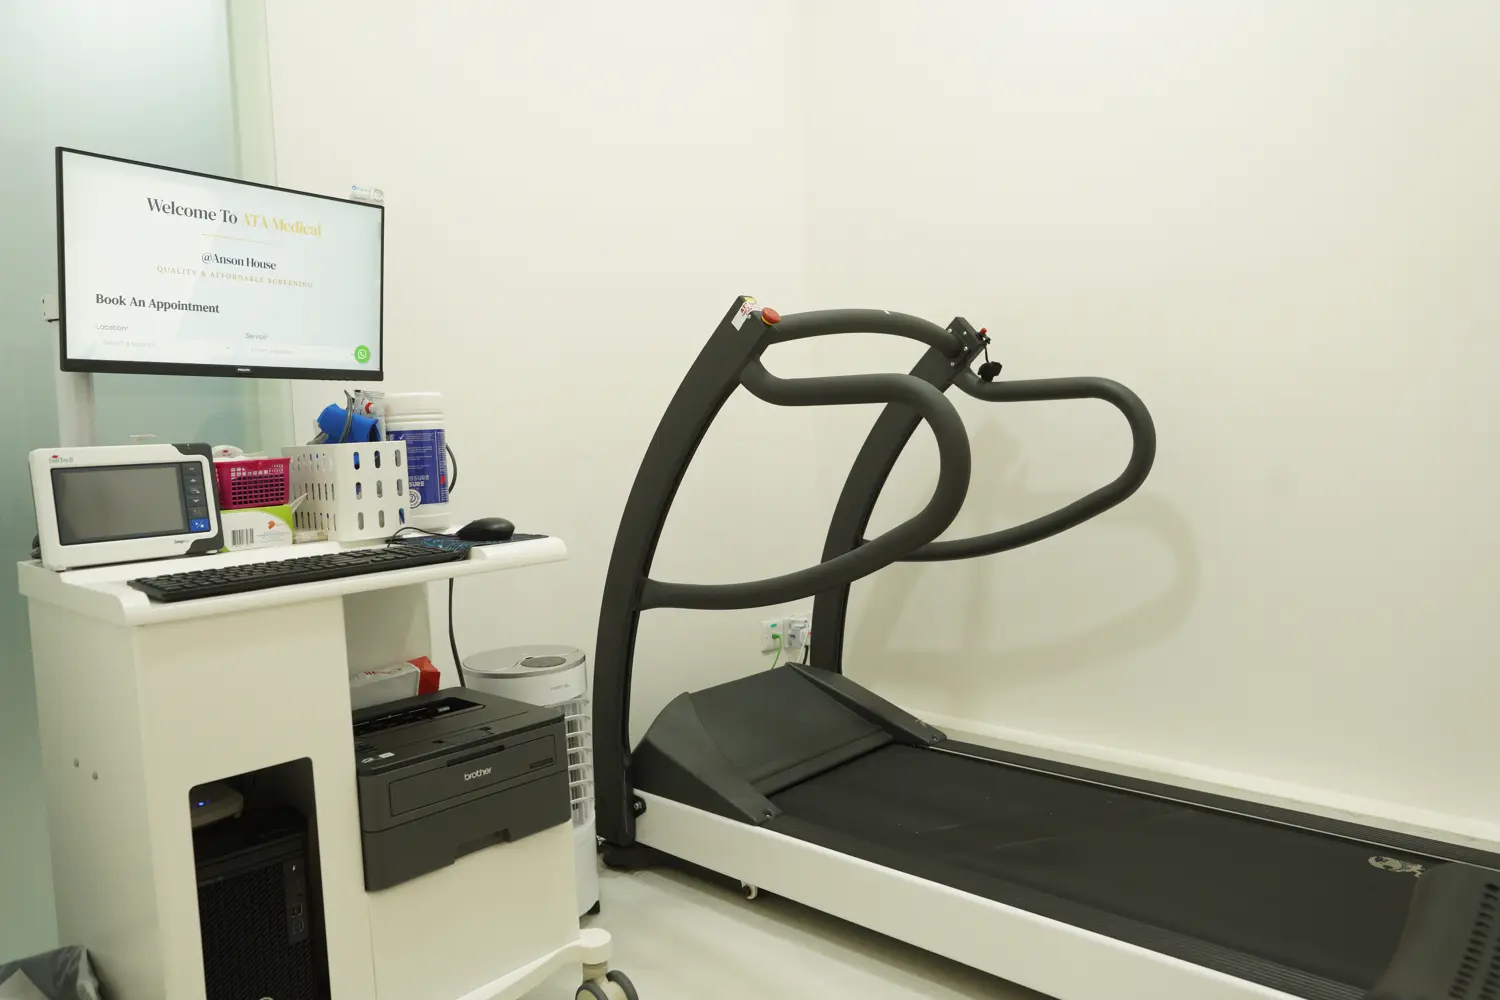 Treadmill machine with electrocardiogram (ECG) equipment for conducting Treadmill Stress Test (TMX)